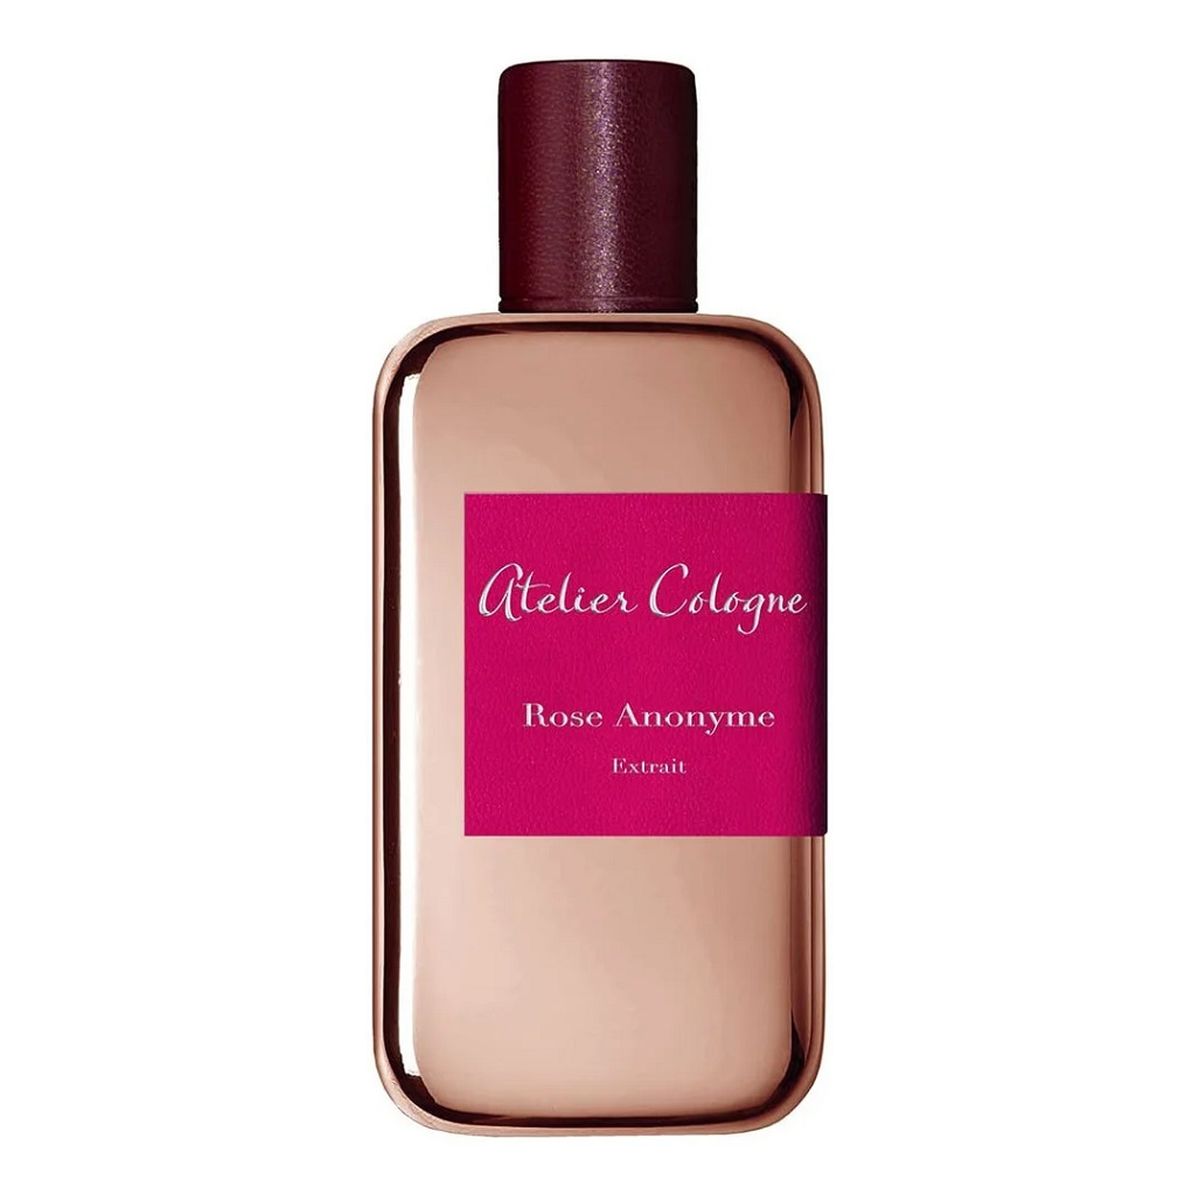 Atelier Cologne Rose anonyme ekstrakt perfum spray 100ml